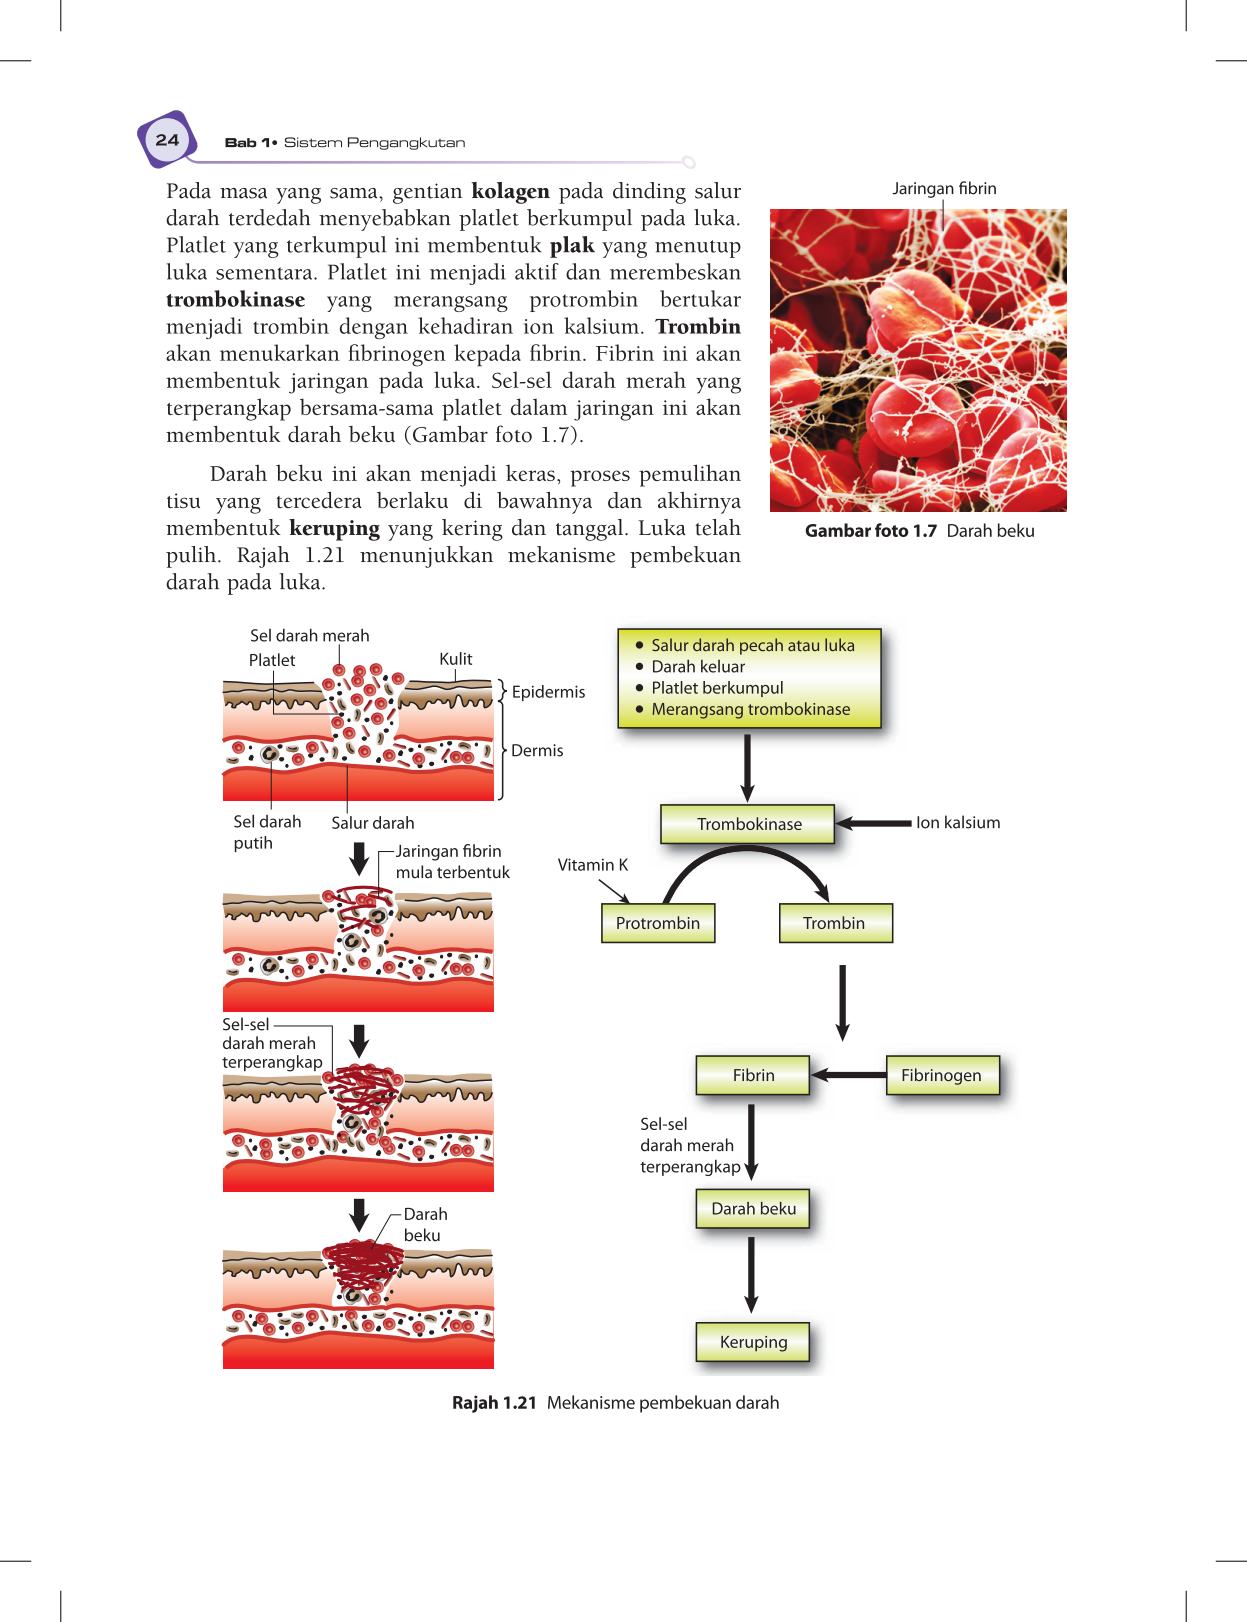 T5 : Biology TB BM Page36